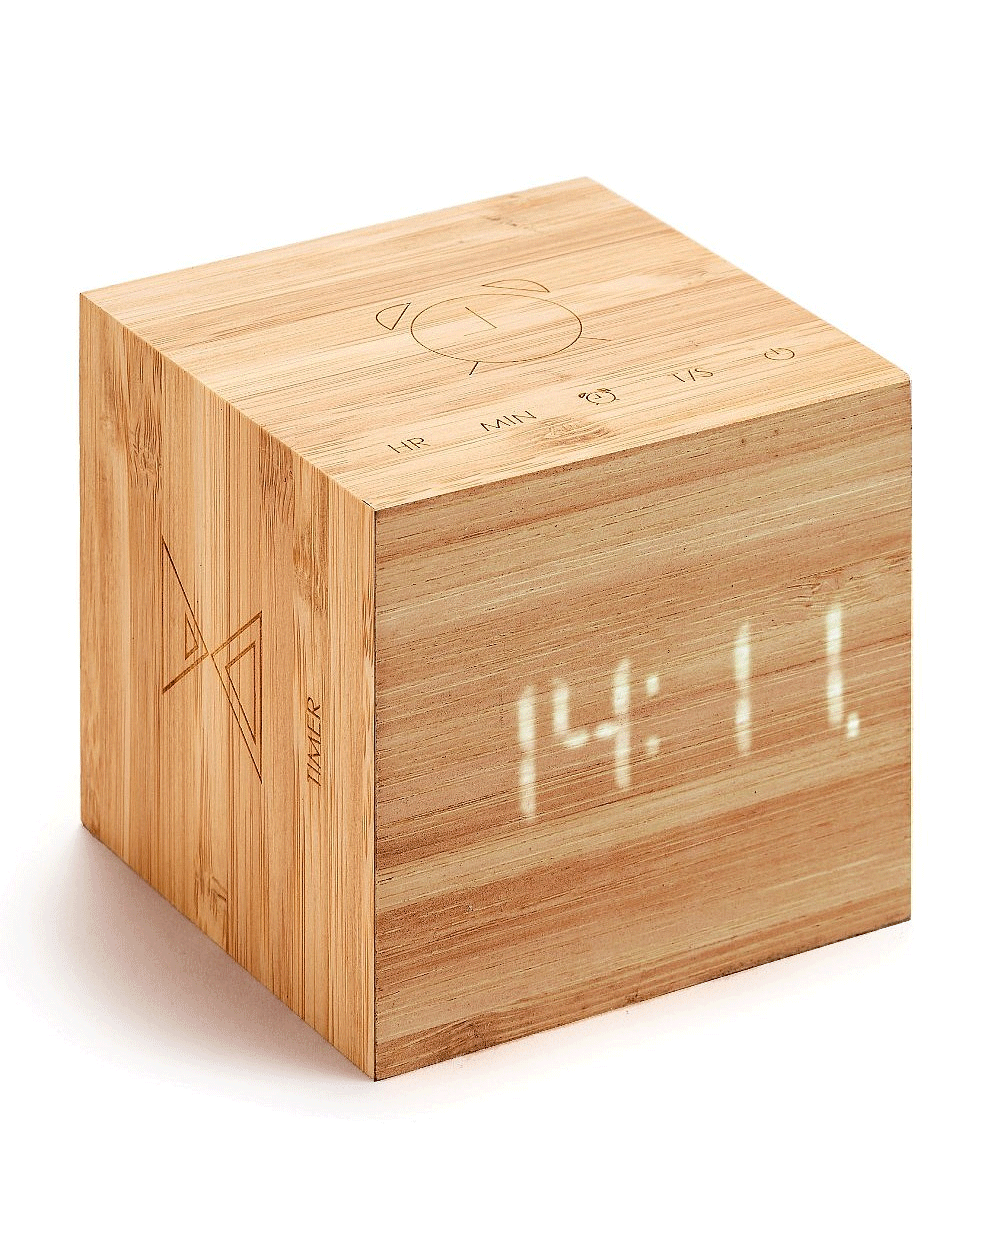 Cube Plus Clock in Natural Bamboo